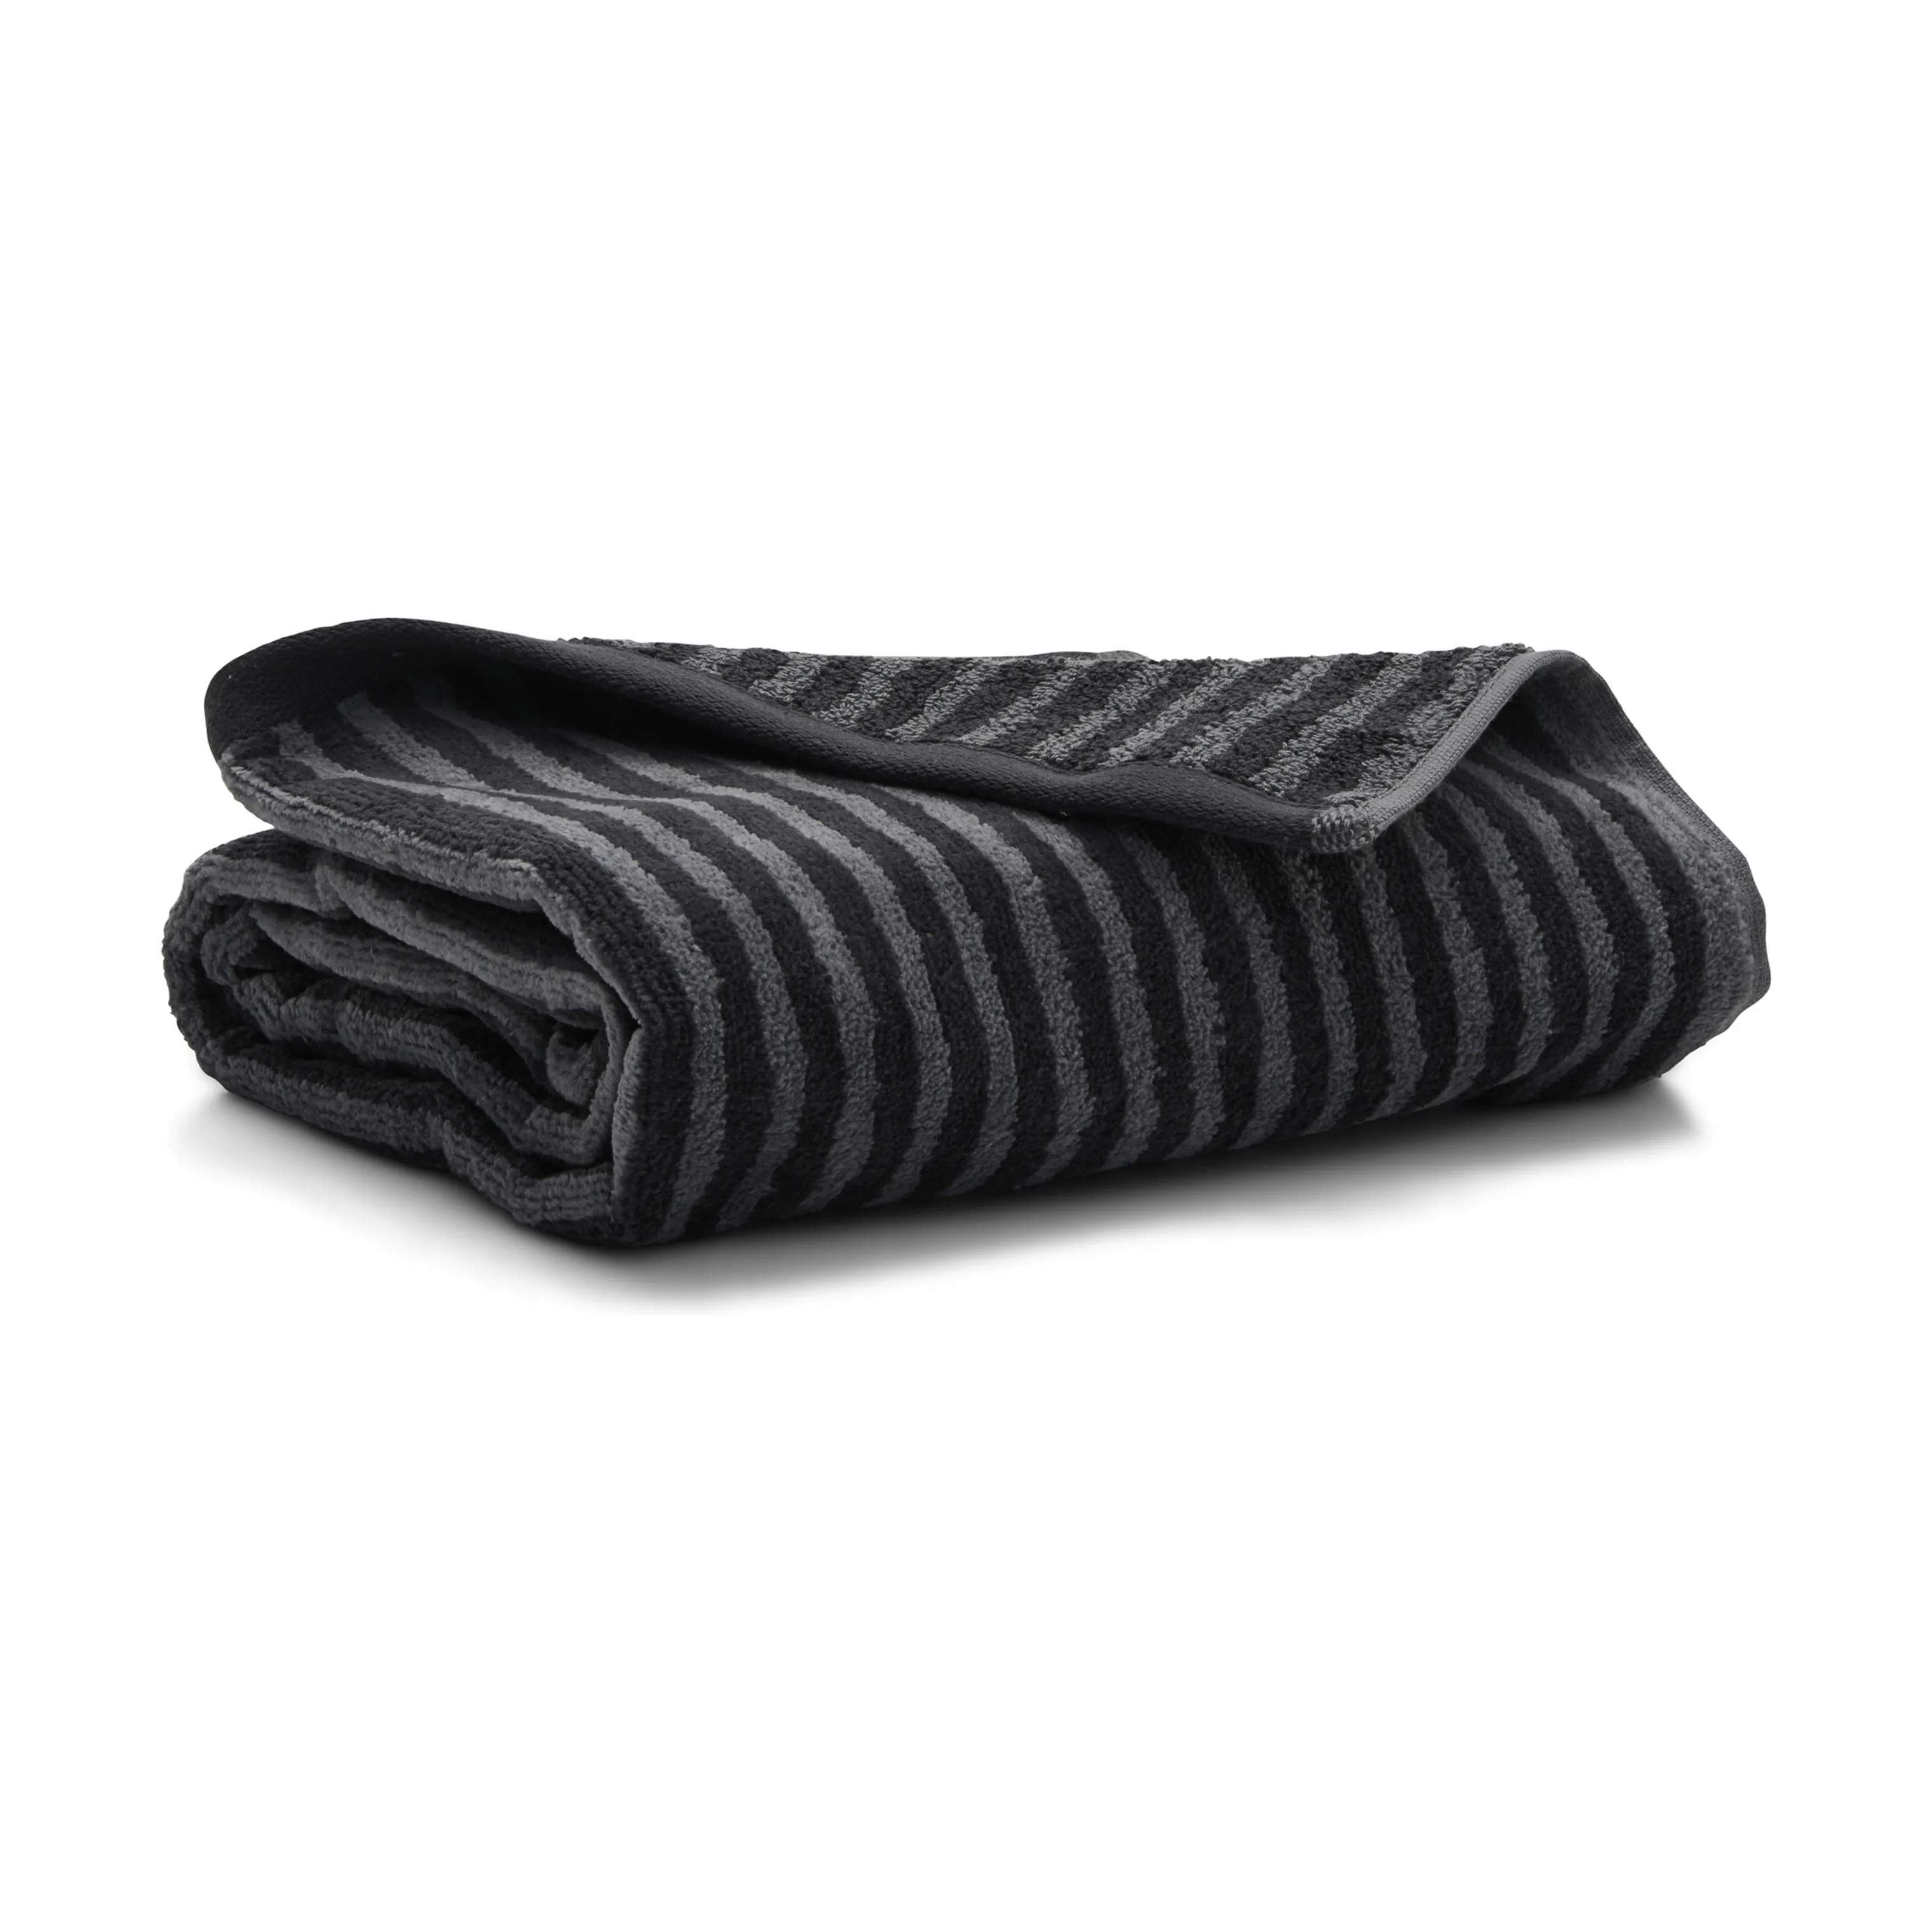 Håndklæde, lysegrå/mørkegrå, large